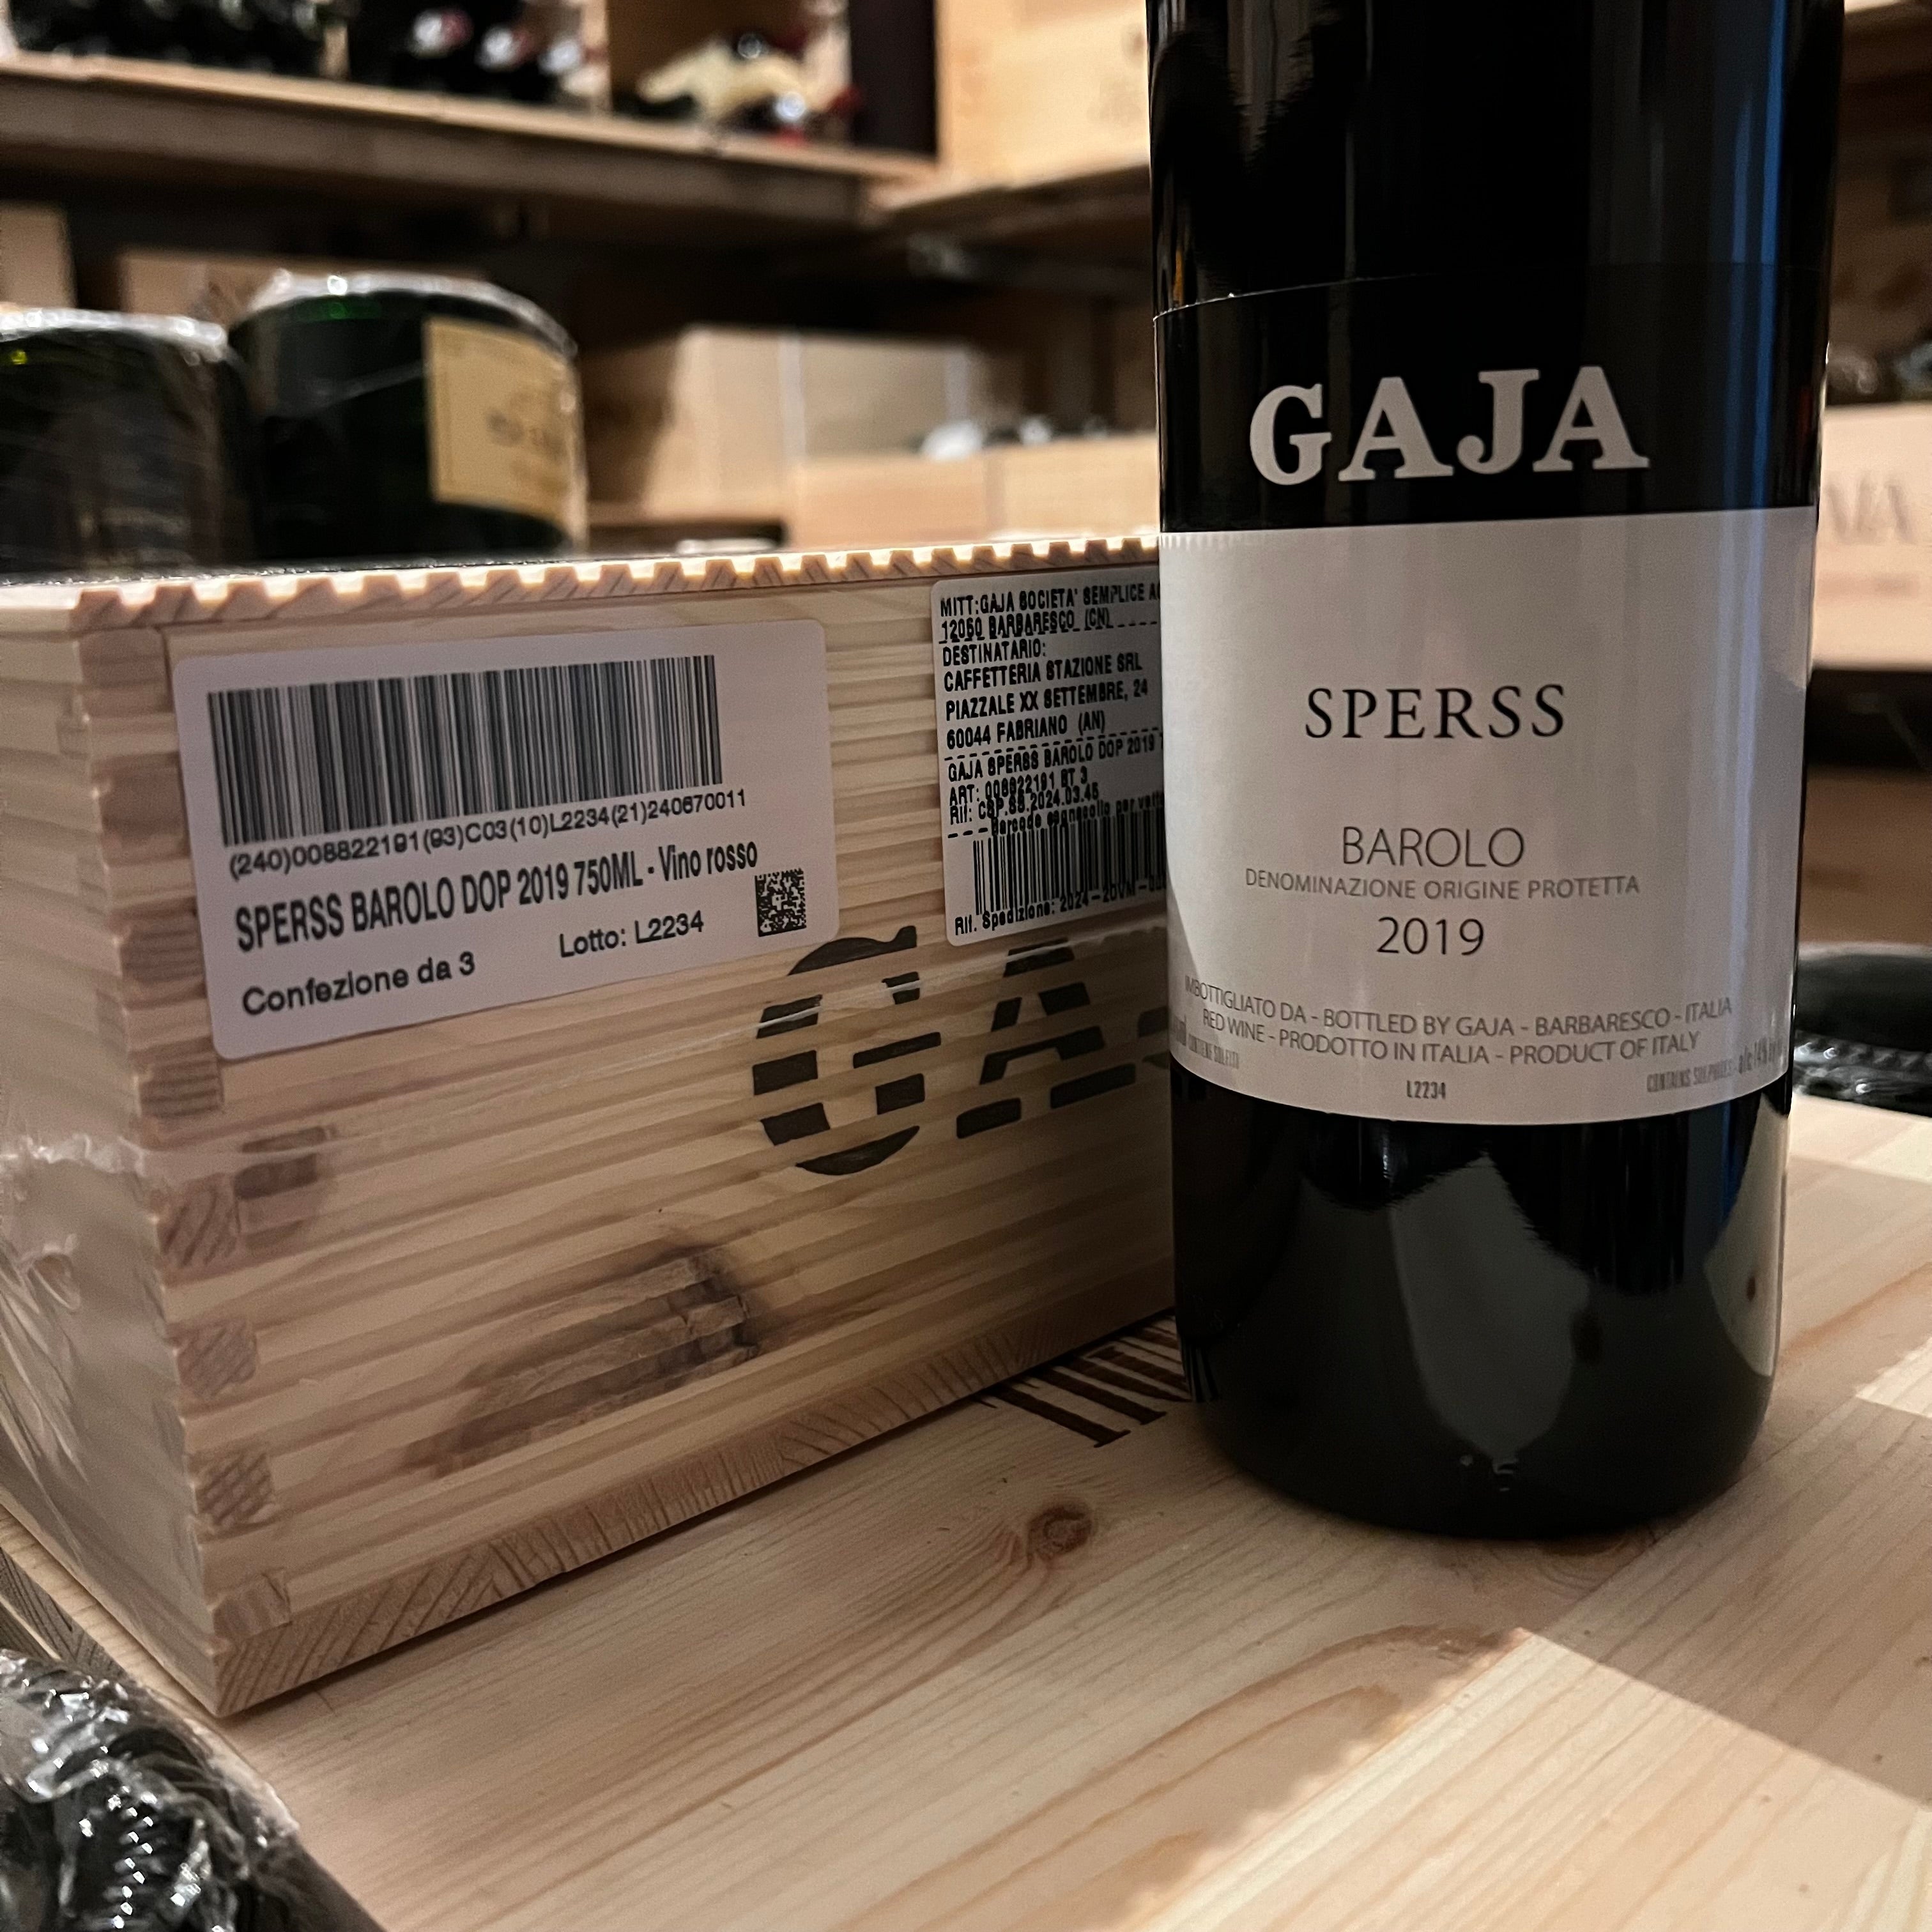 Gaja Sperss Barolo DOP 2019 - Cassa Legno 3 Bottiglie